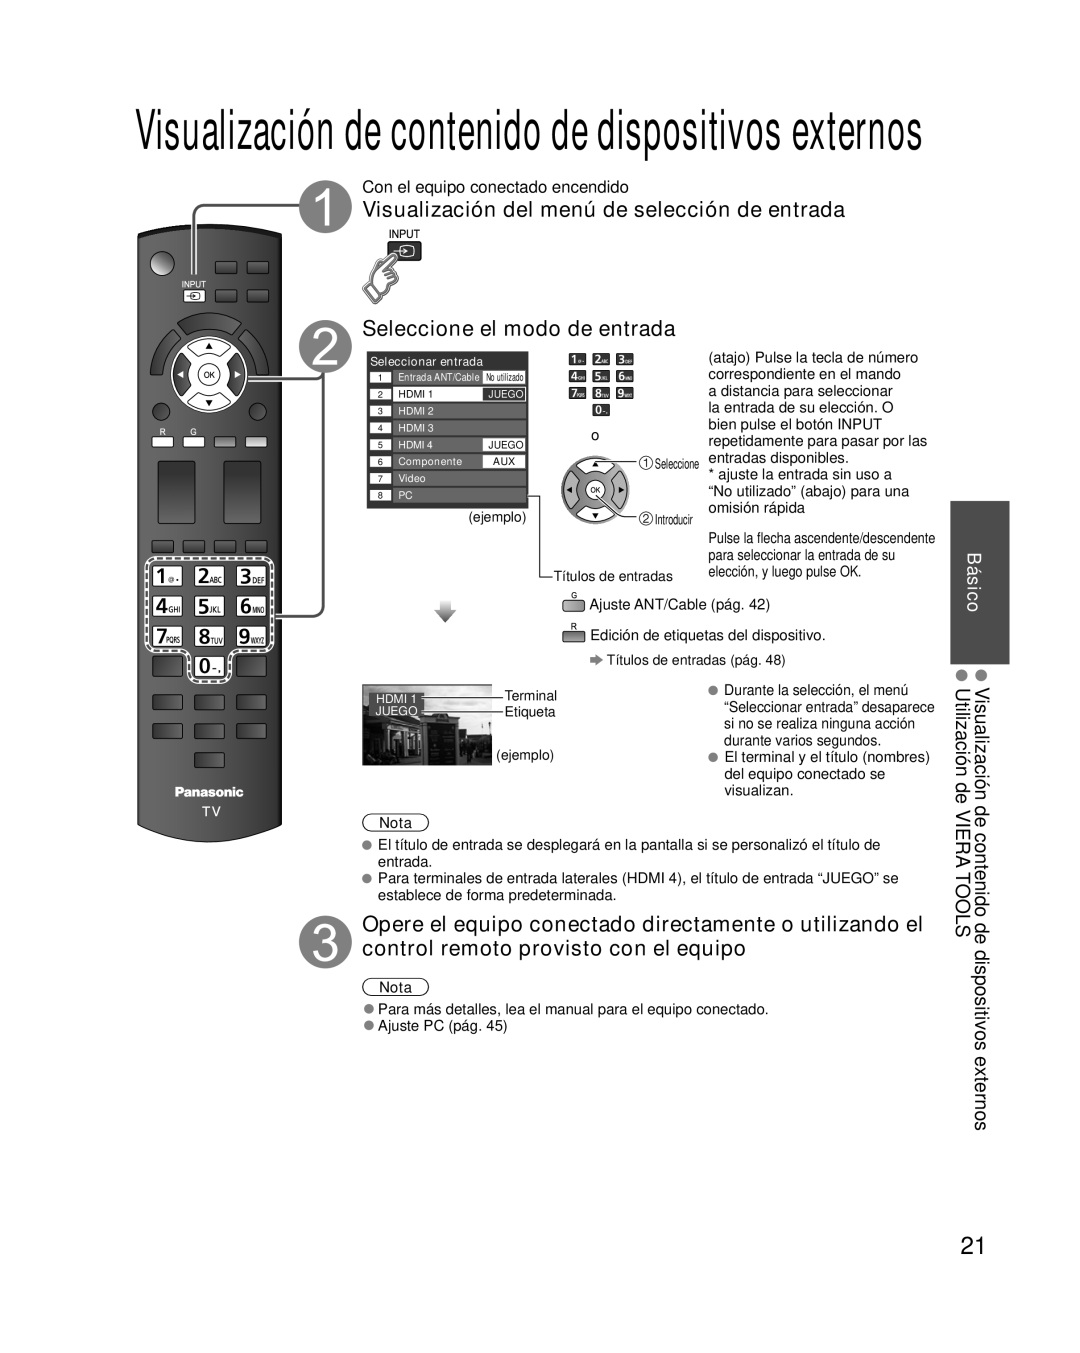 Panasonic TC-L37E3 Visualización de contenido de dispositivos externos, Visualización del menú de selección de entrada 